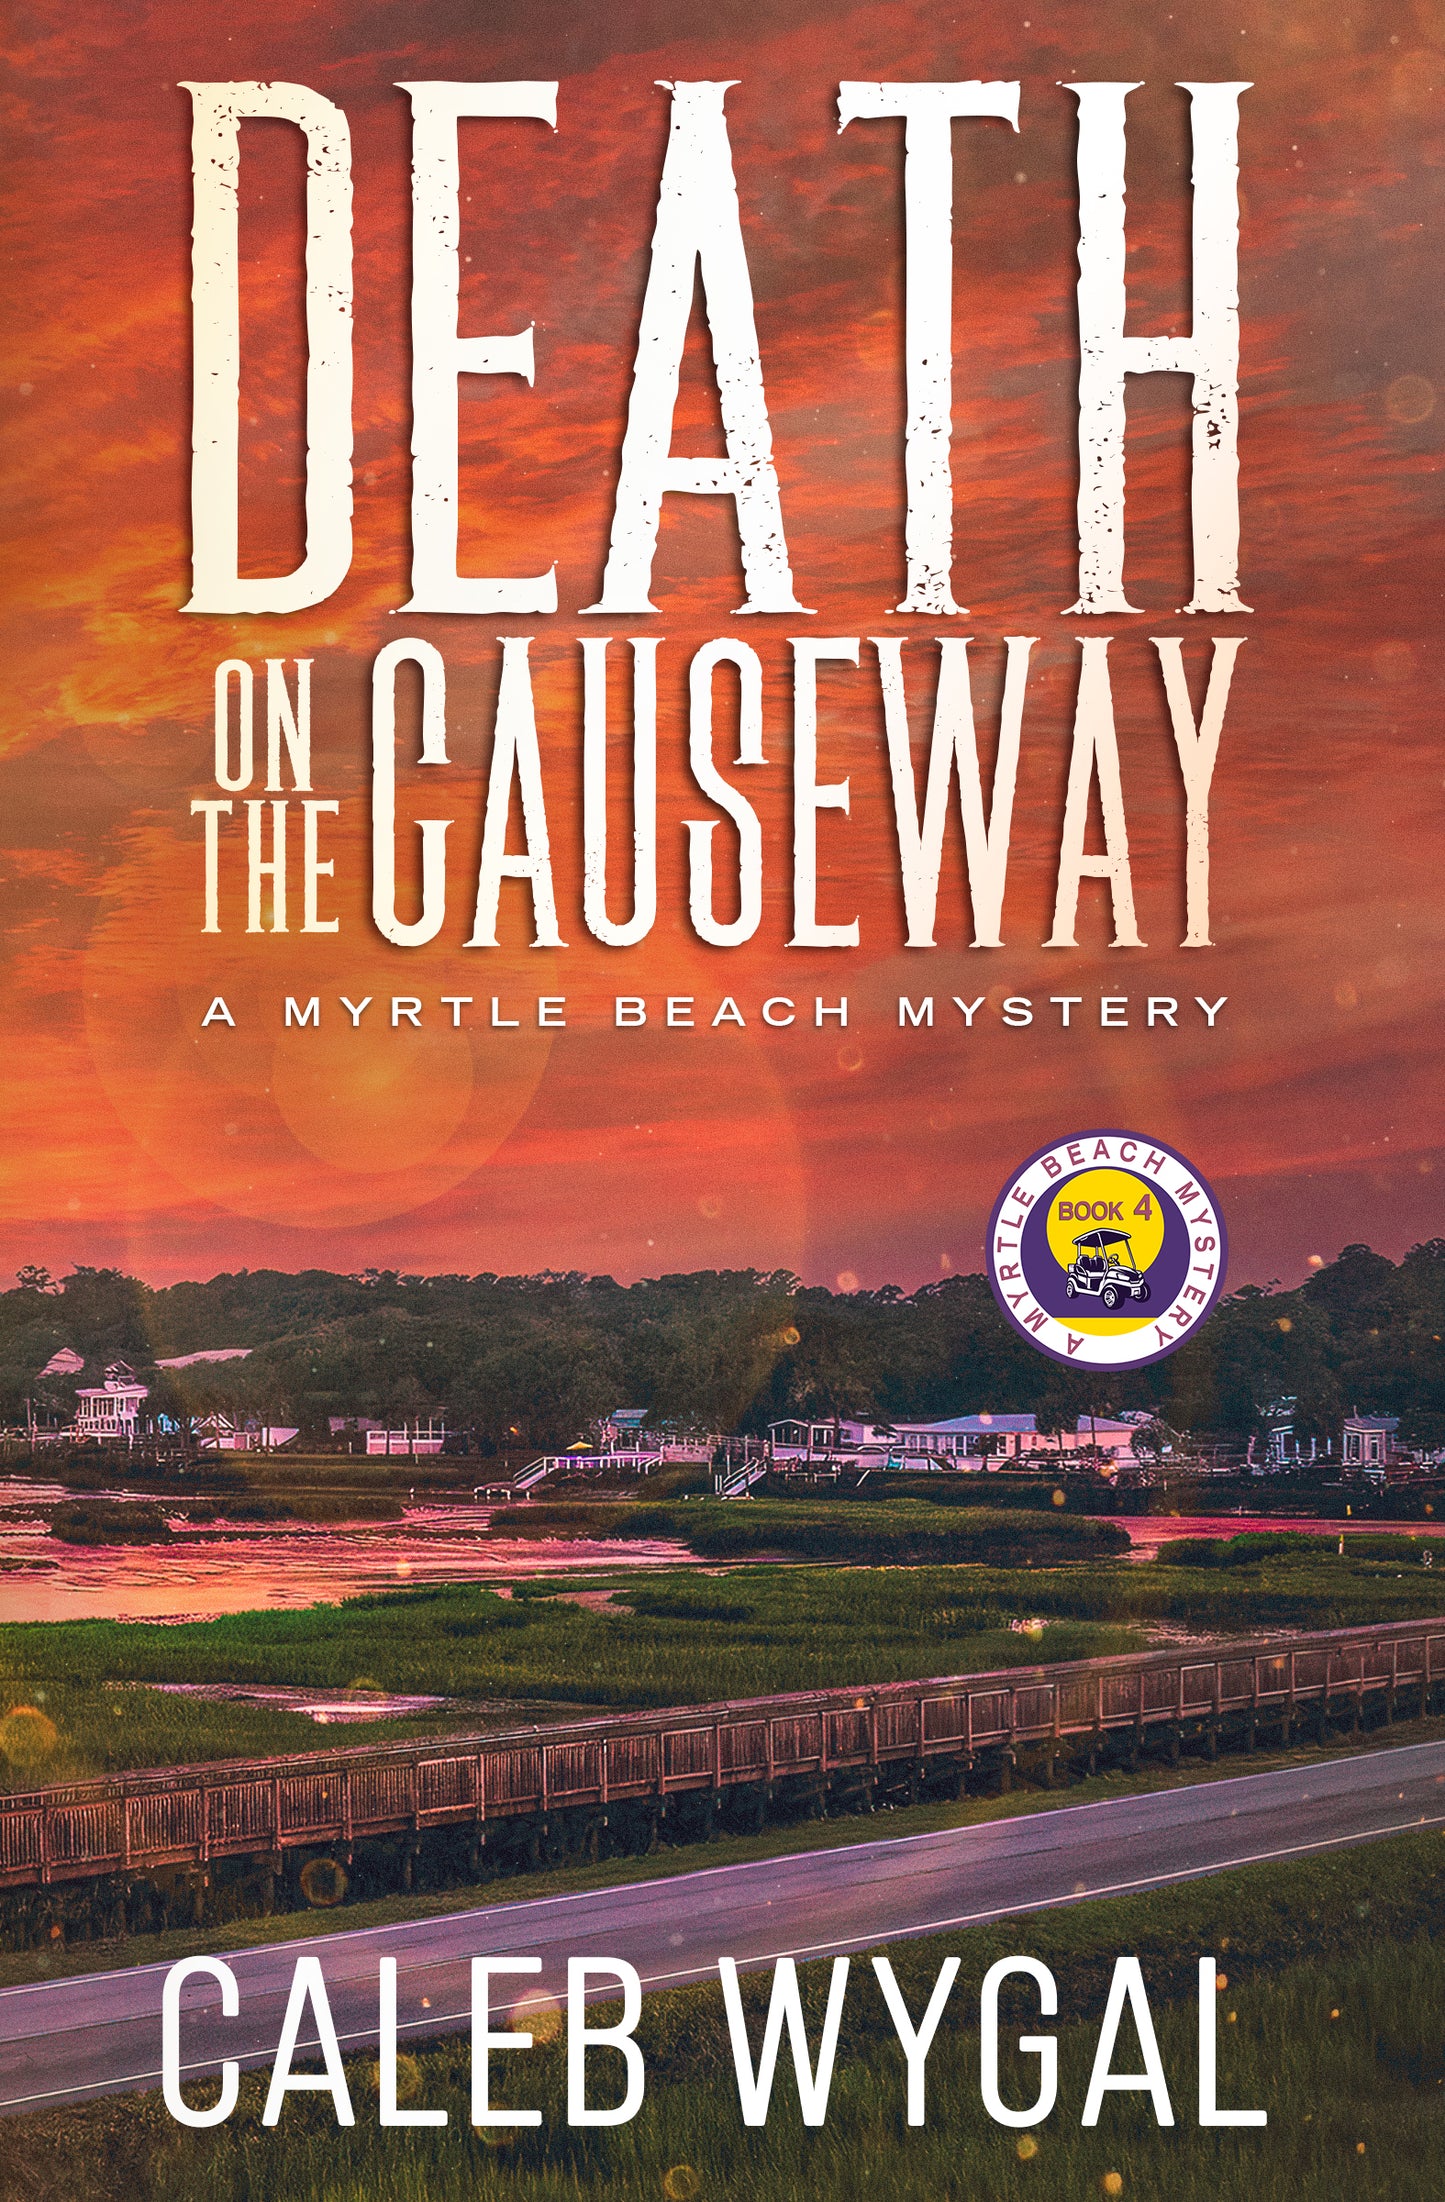 Myrtle Beach Mysteries Book 4: Death on the Causeway